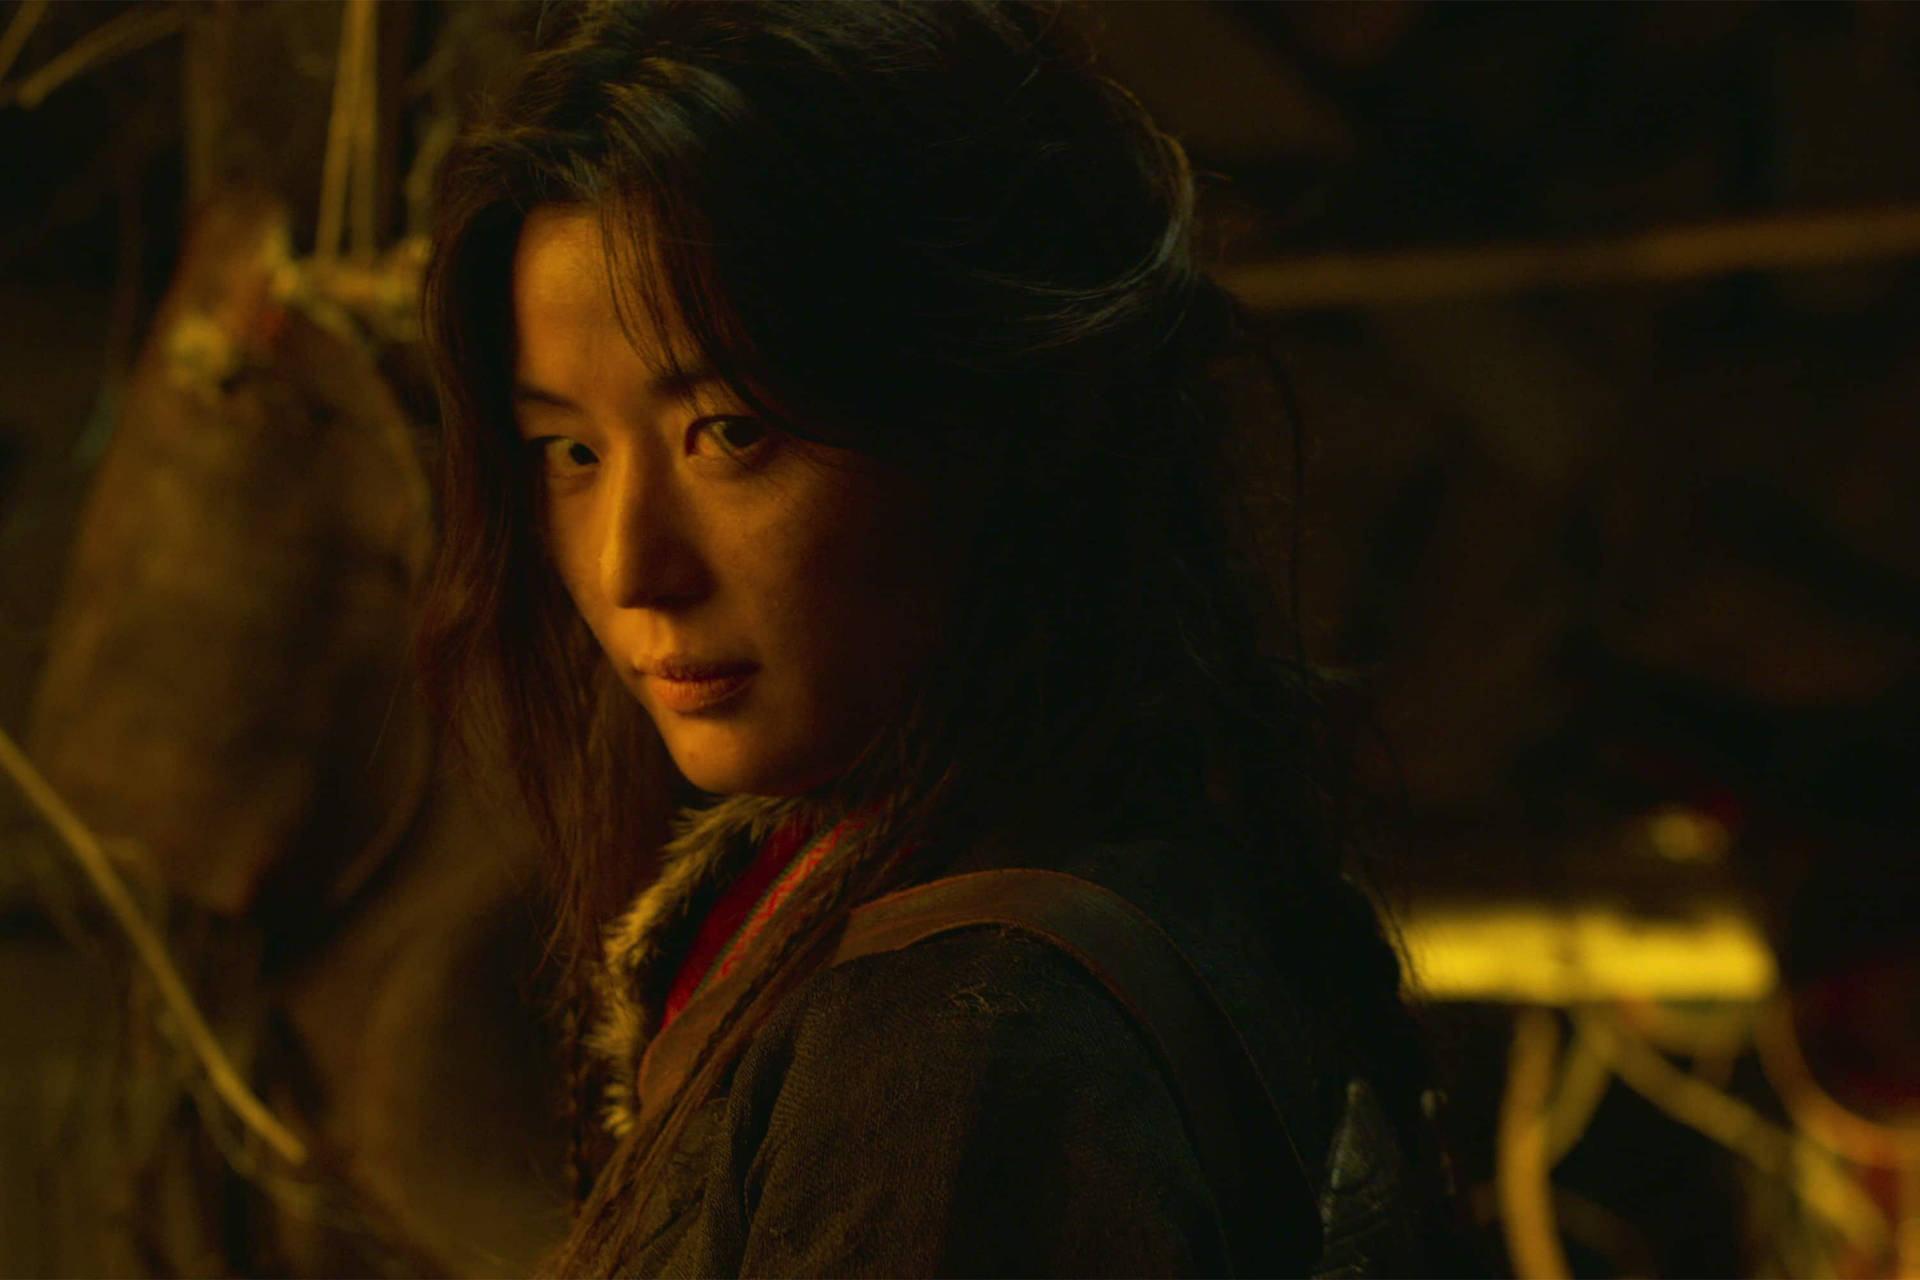 Jun Ji Hyun In Kingdom Series Background